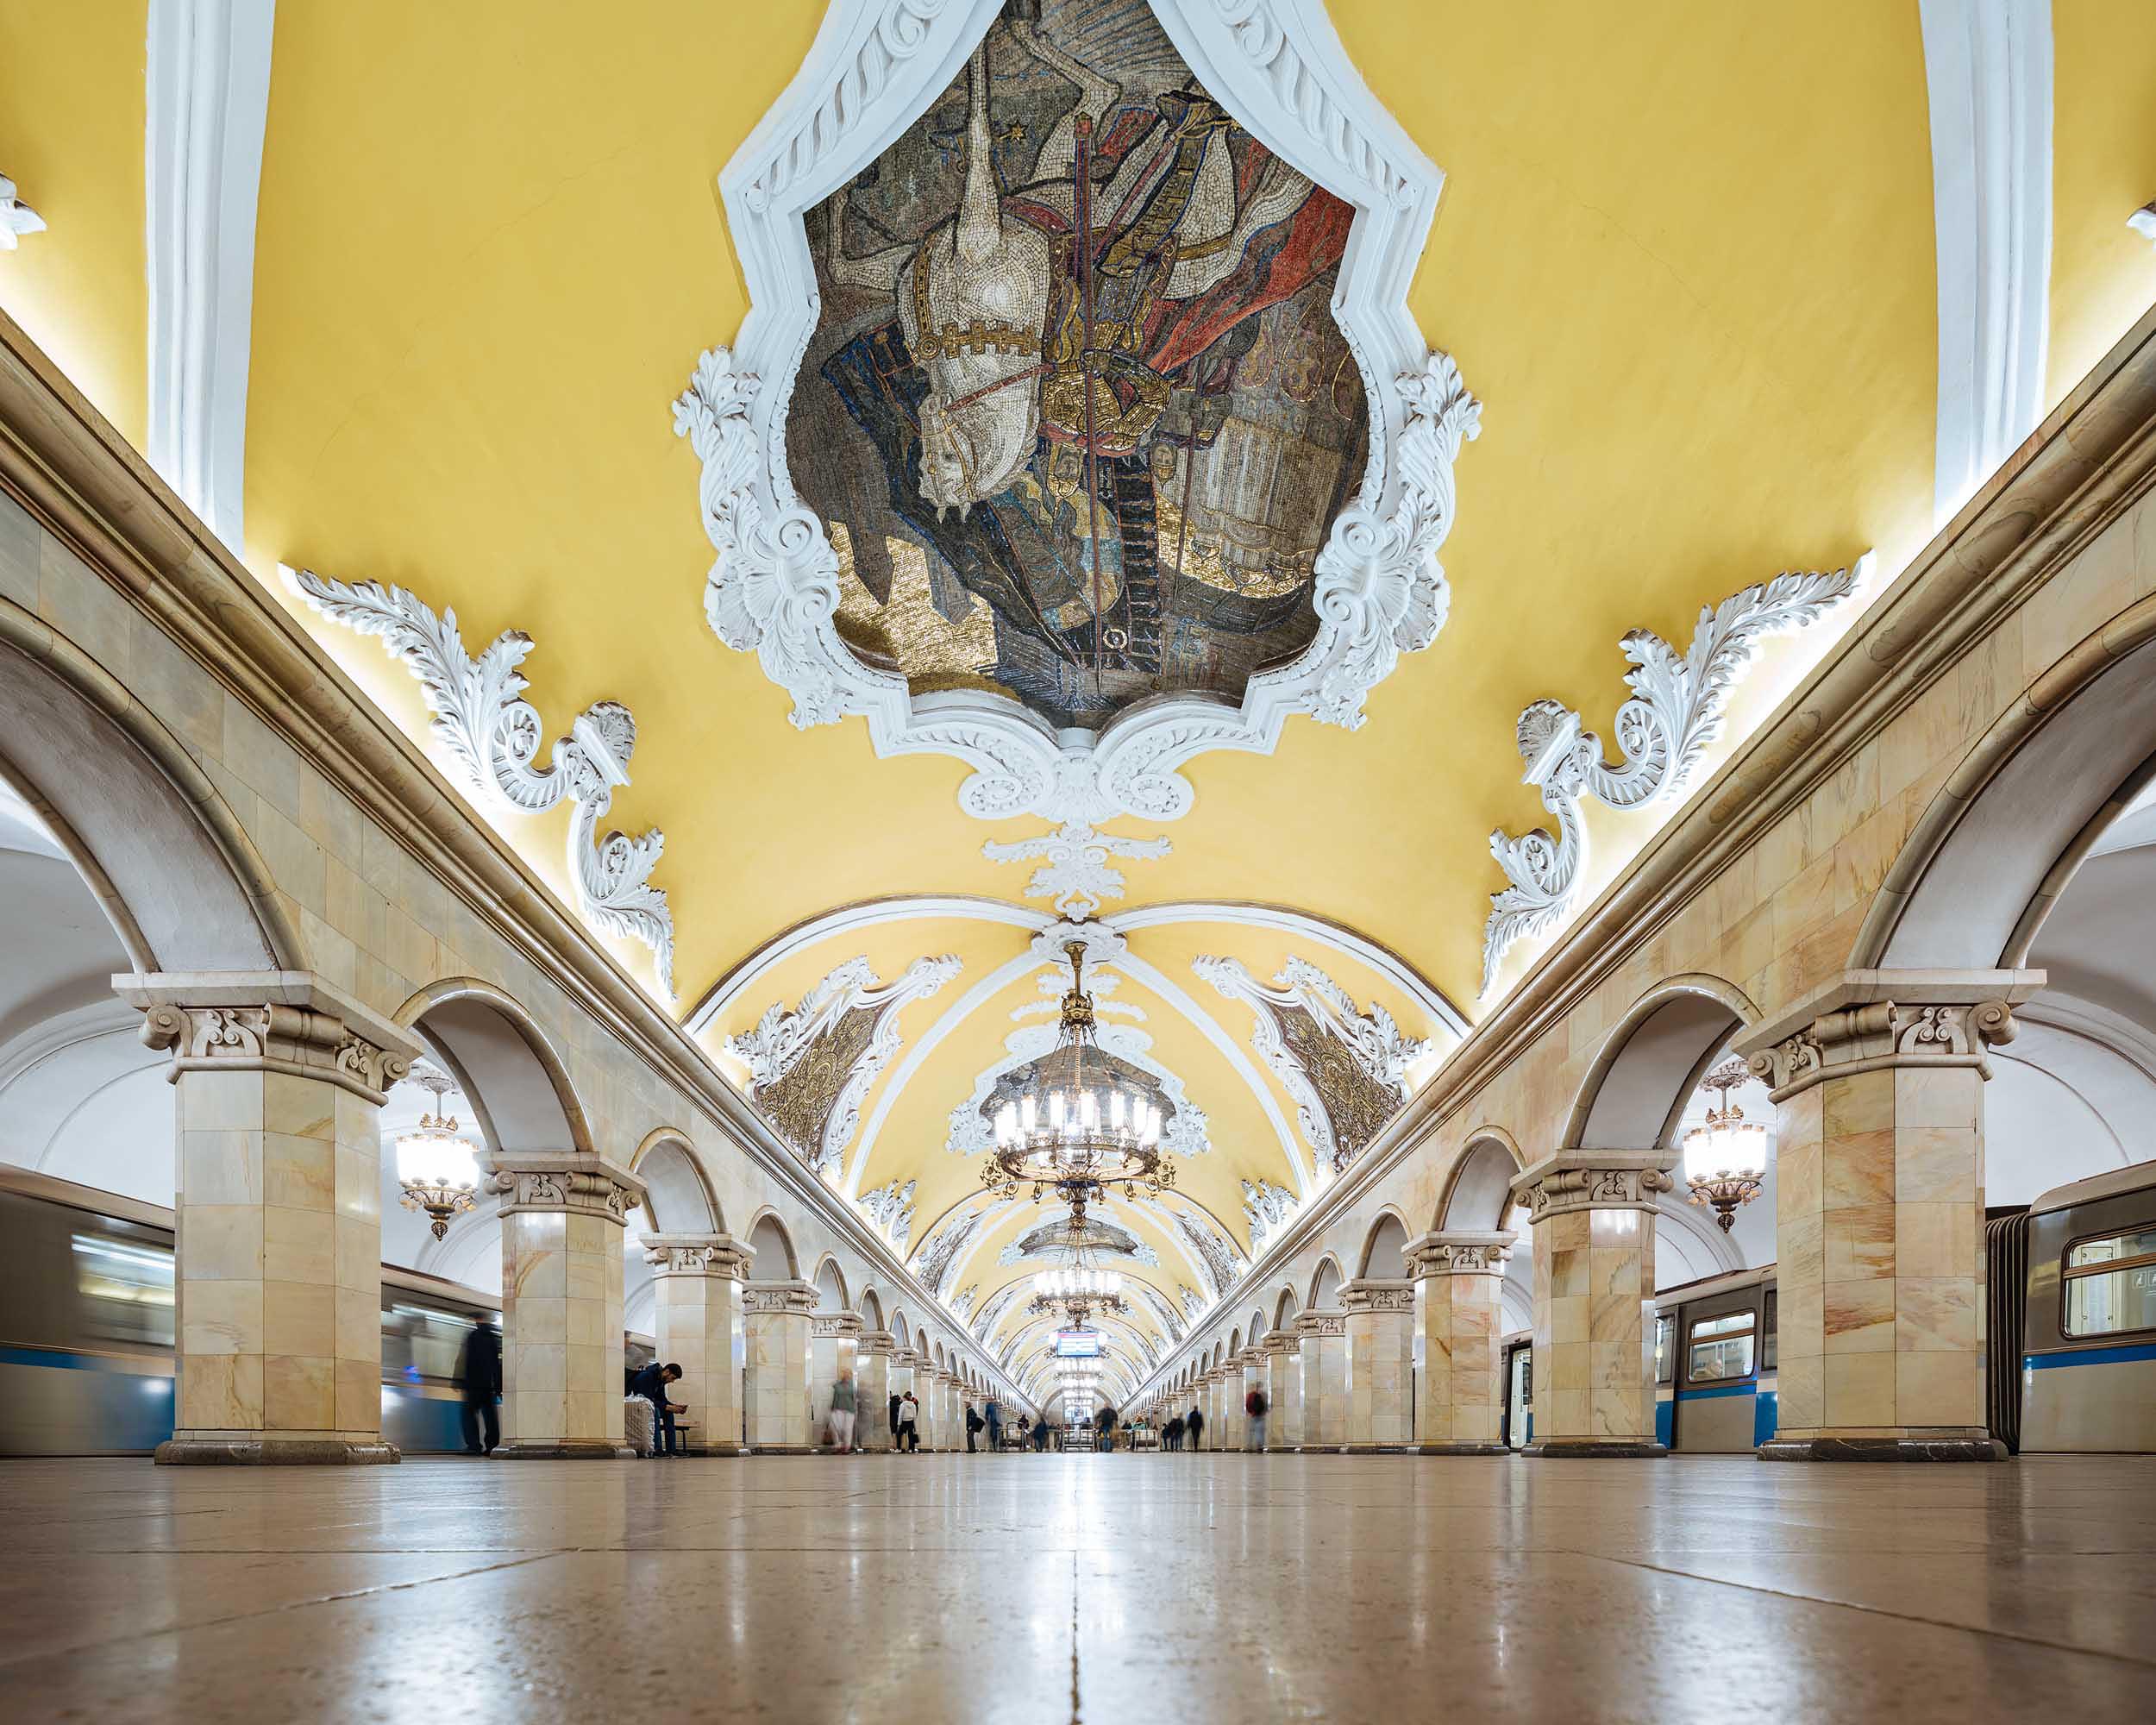 komsomoloskaya-interior-architecture-metro-station-moscow-russia